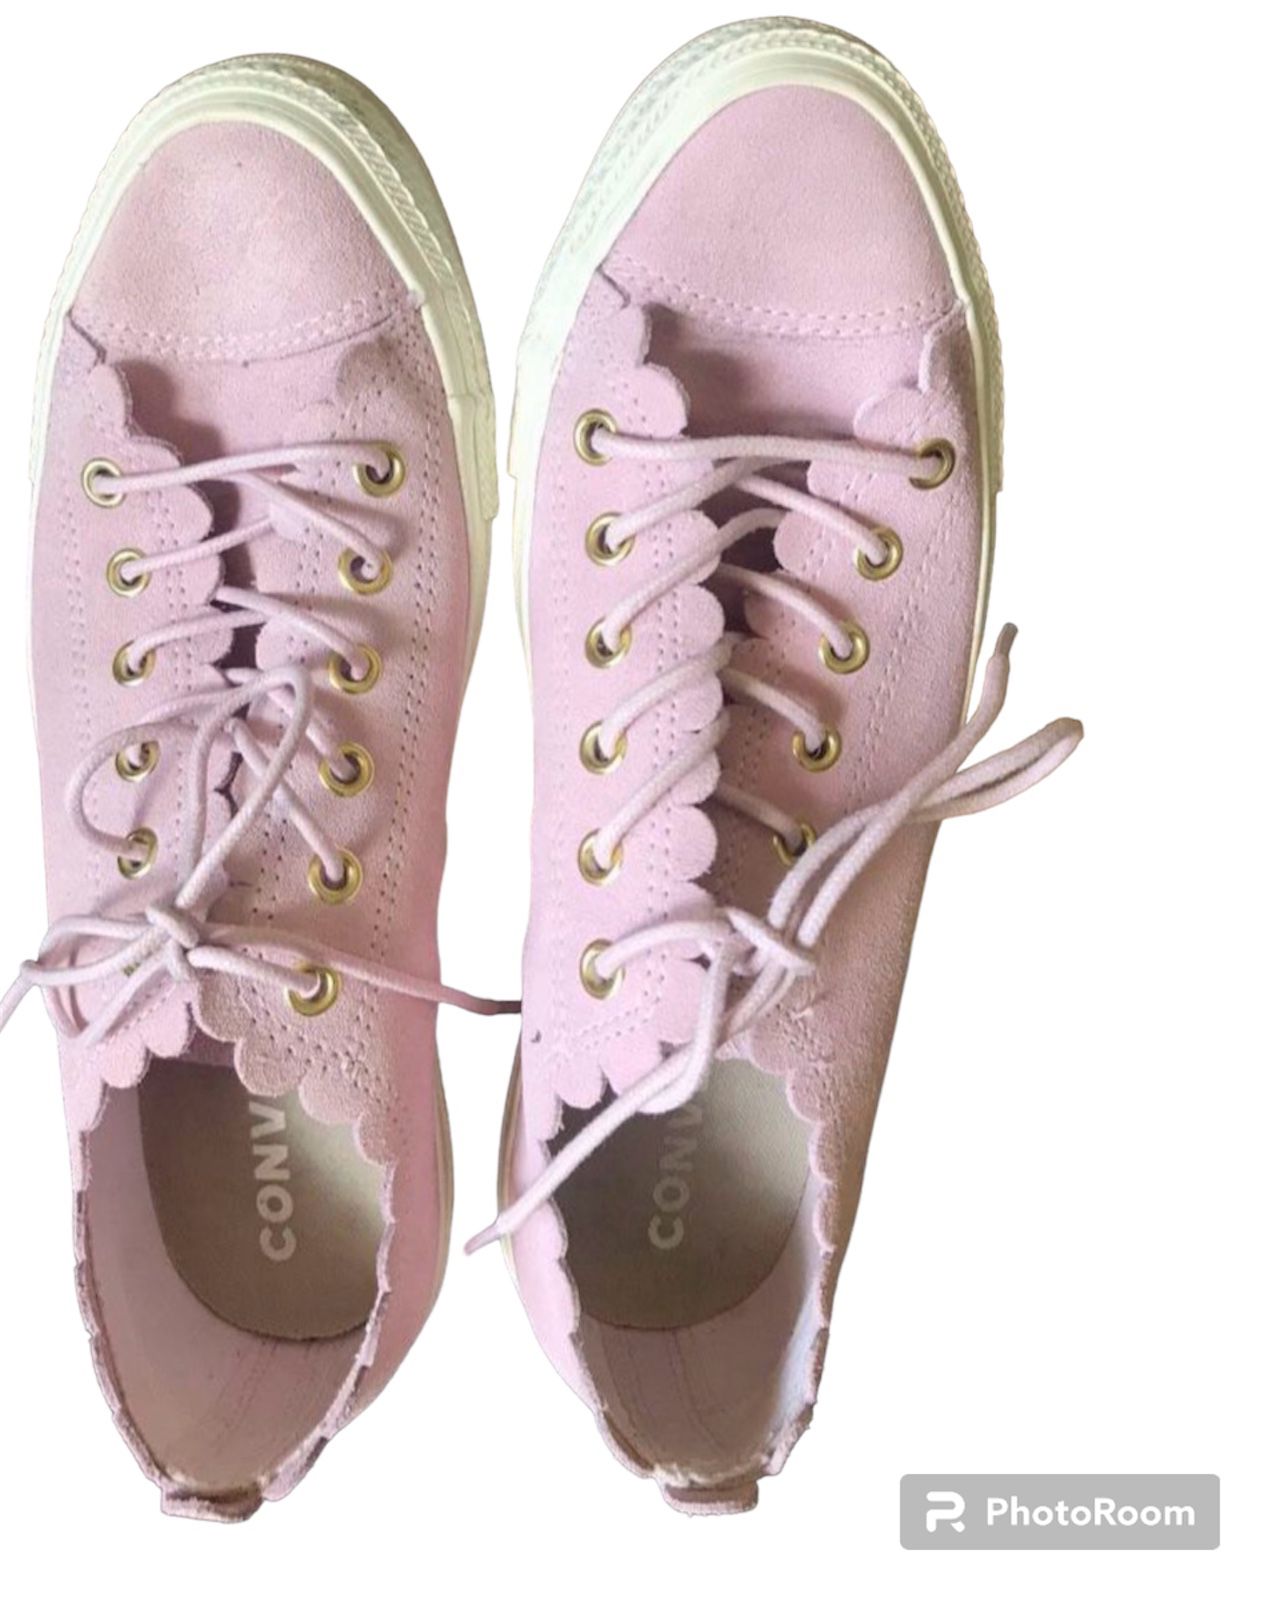 Converse Pink Women’s Sneakers 8